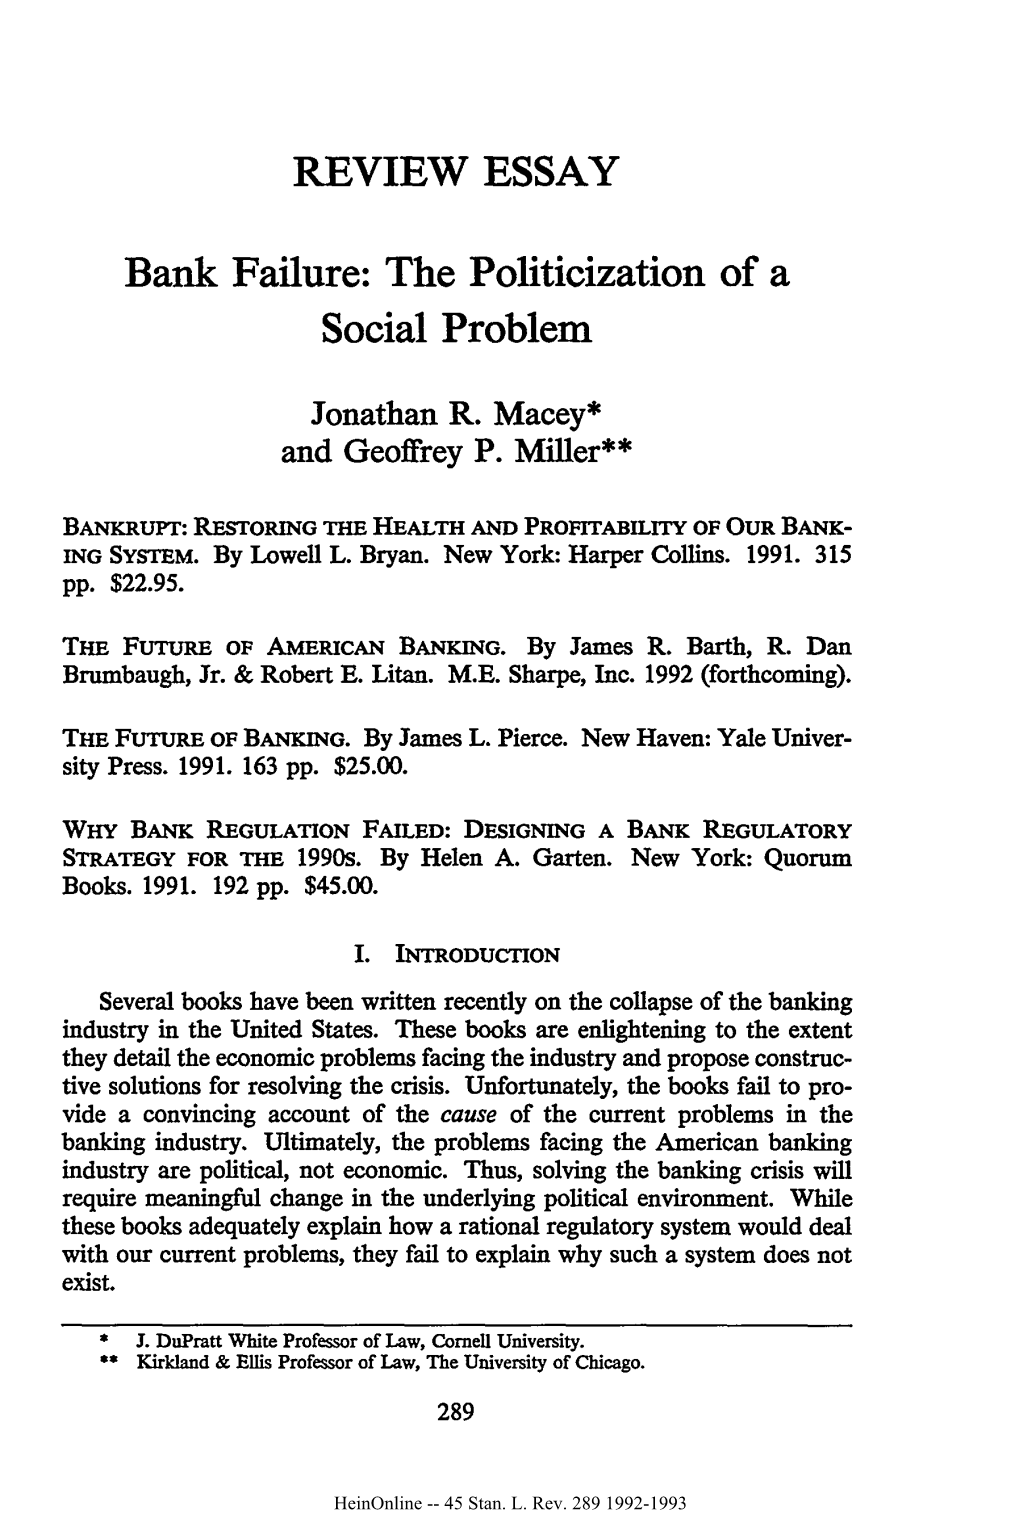 Bank Failure: the Politicization of a Social Problem